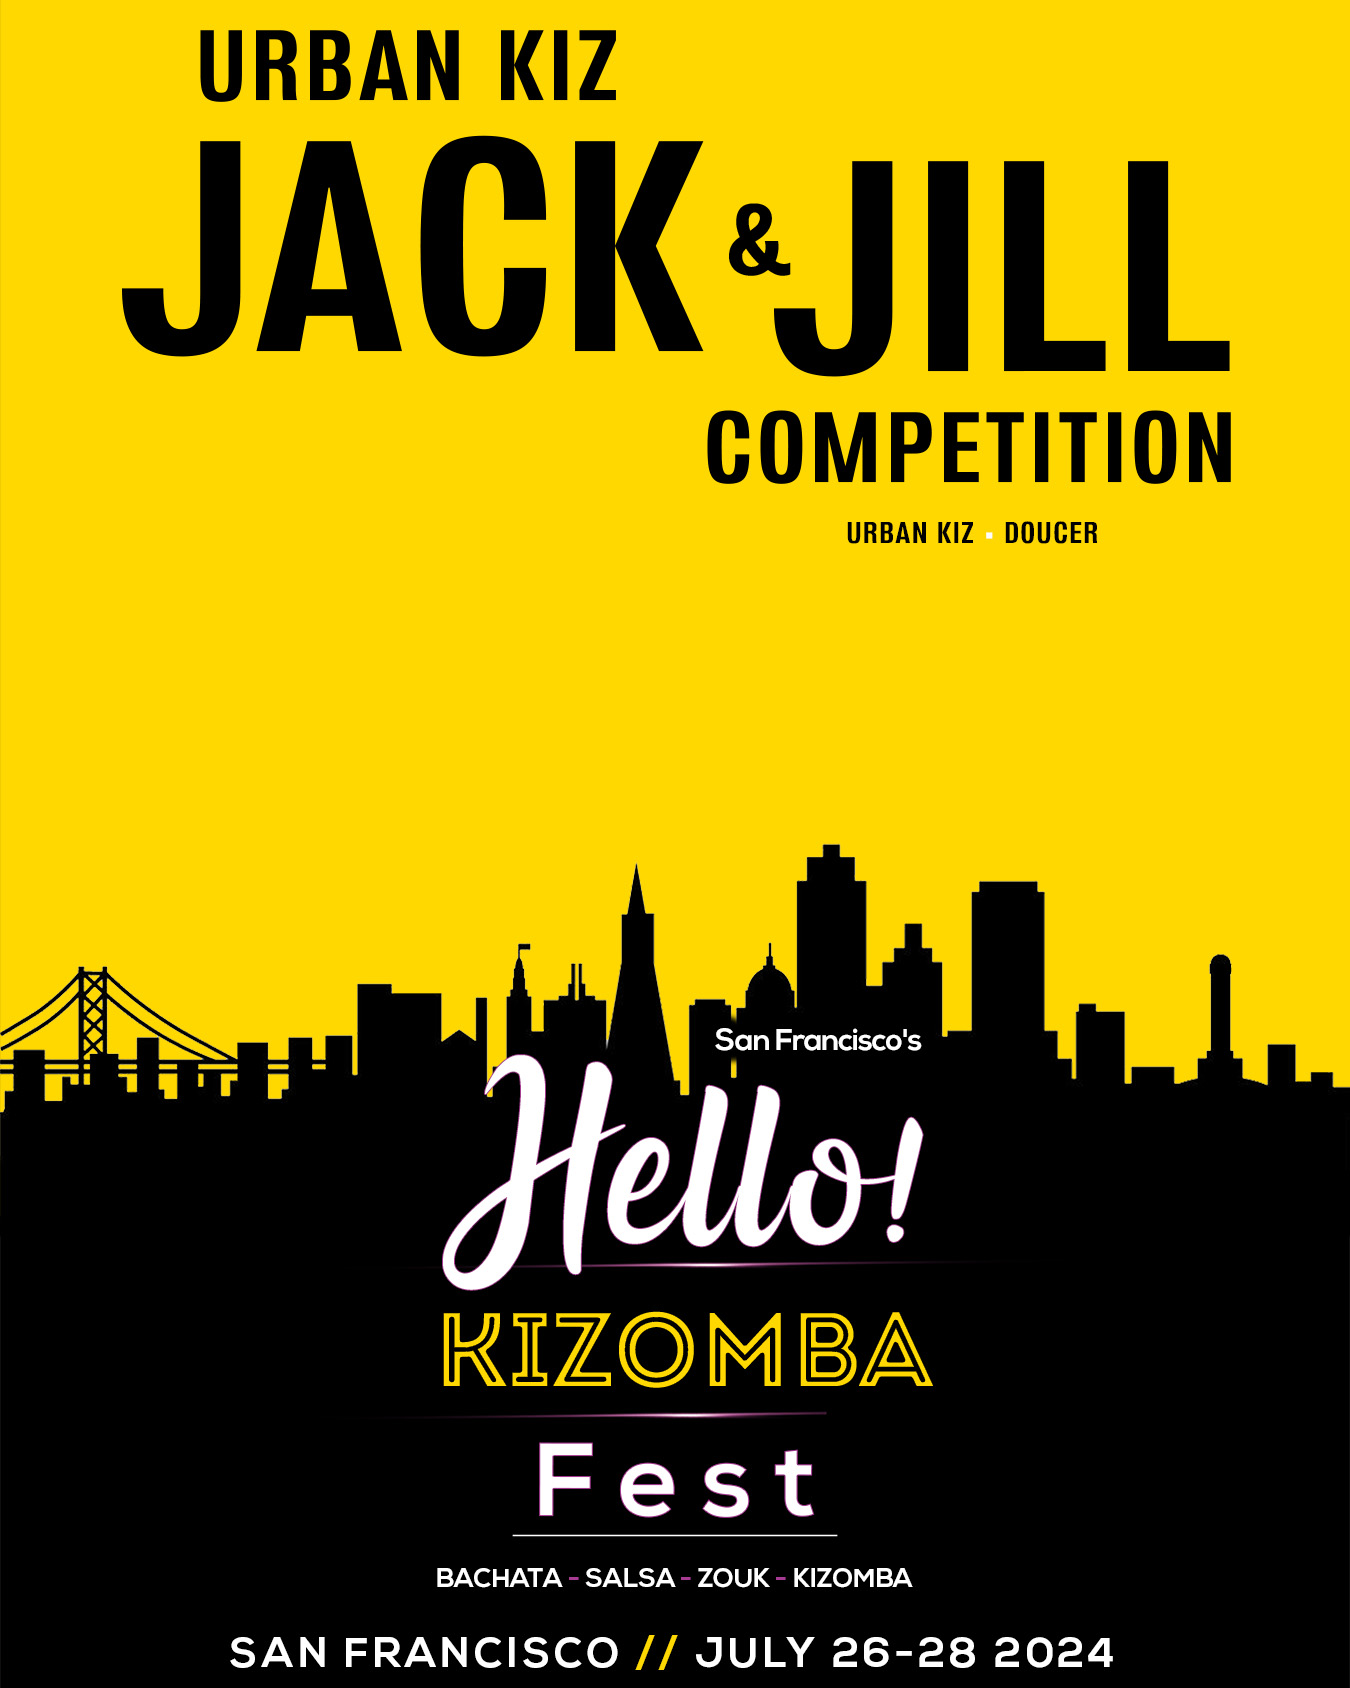 Hello Kizomba Fest - Urban Kiz Jack & Jill Competition